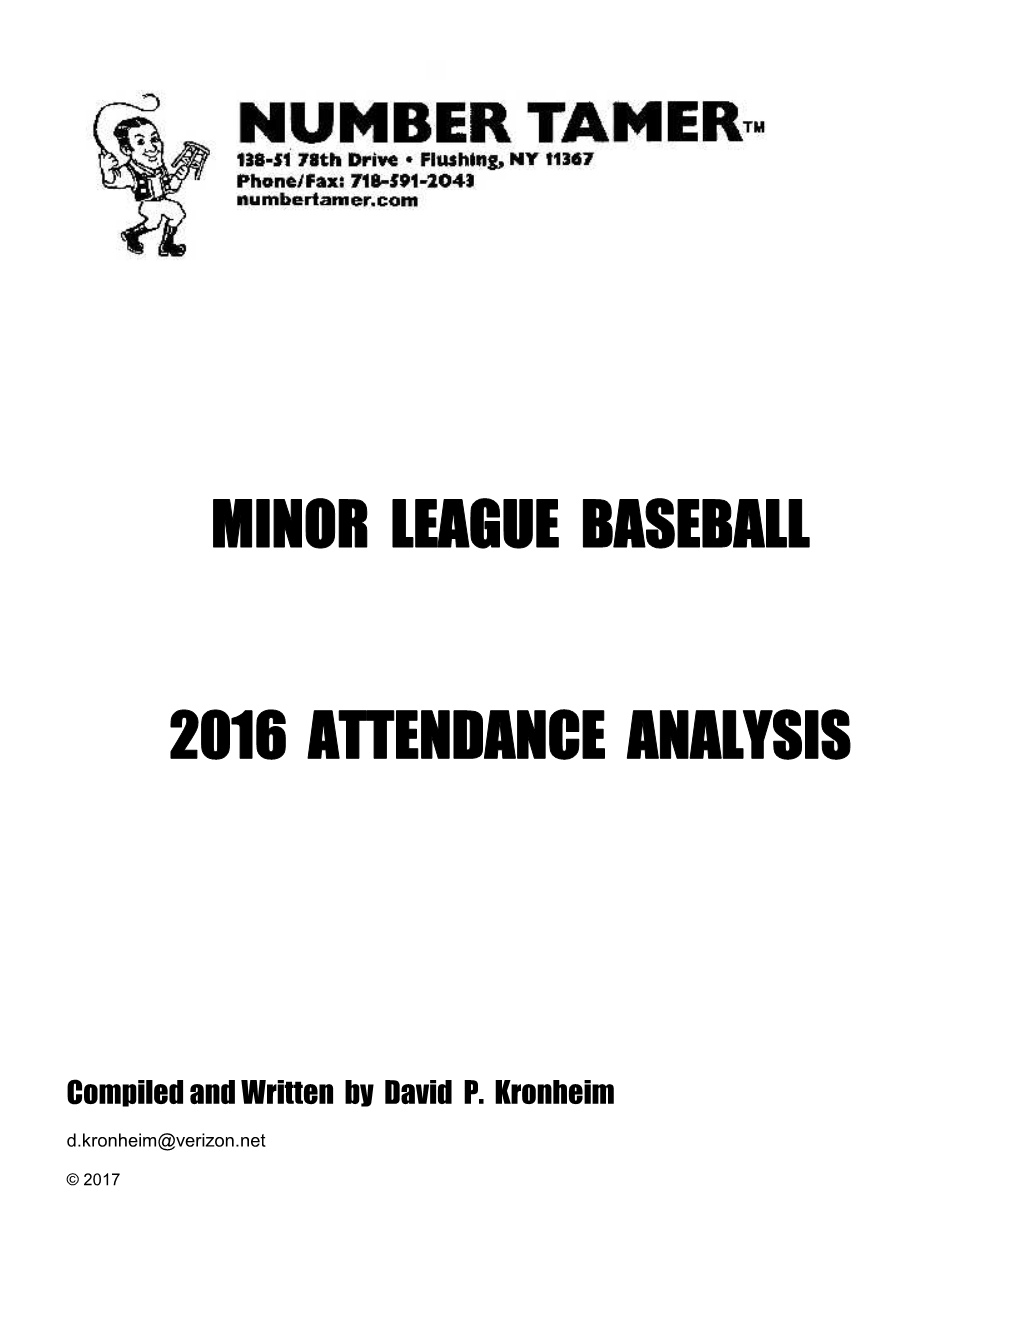 2016 Minor League Baseball Attendance Analysis